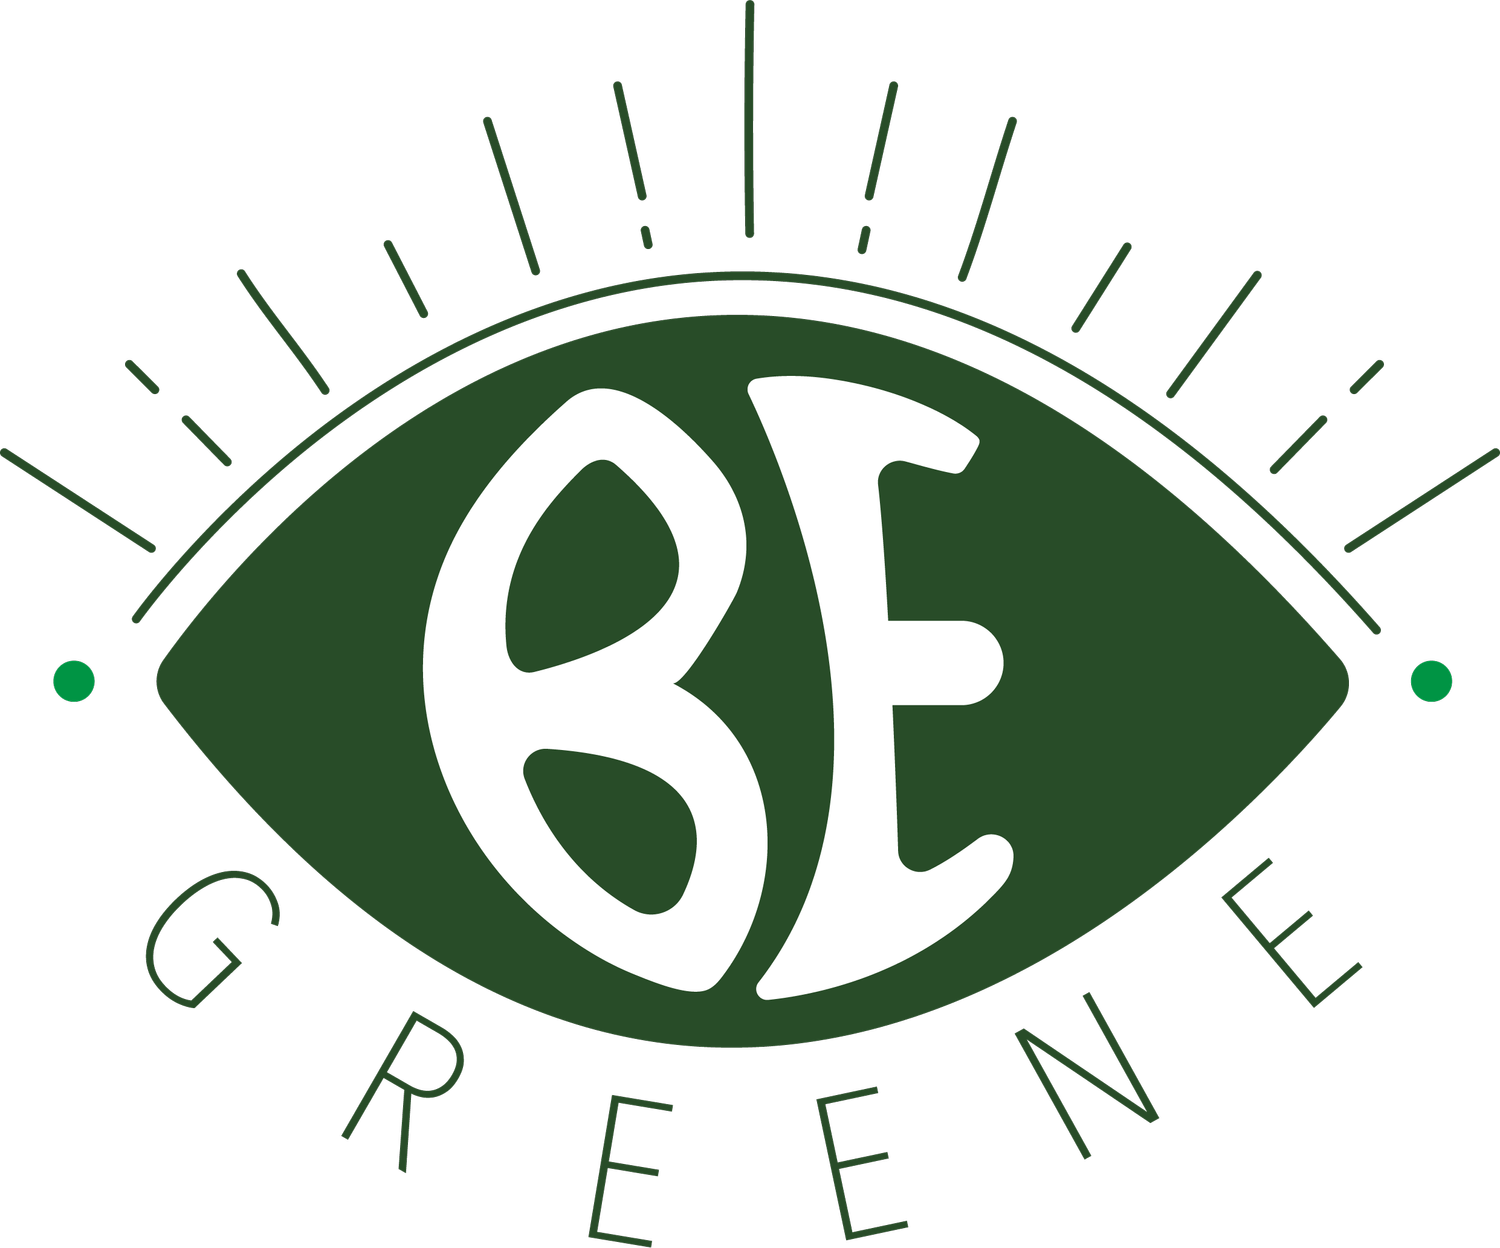 Be Greene